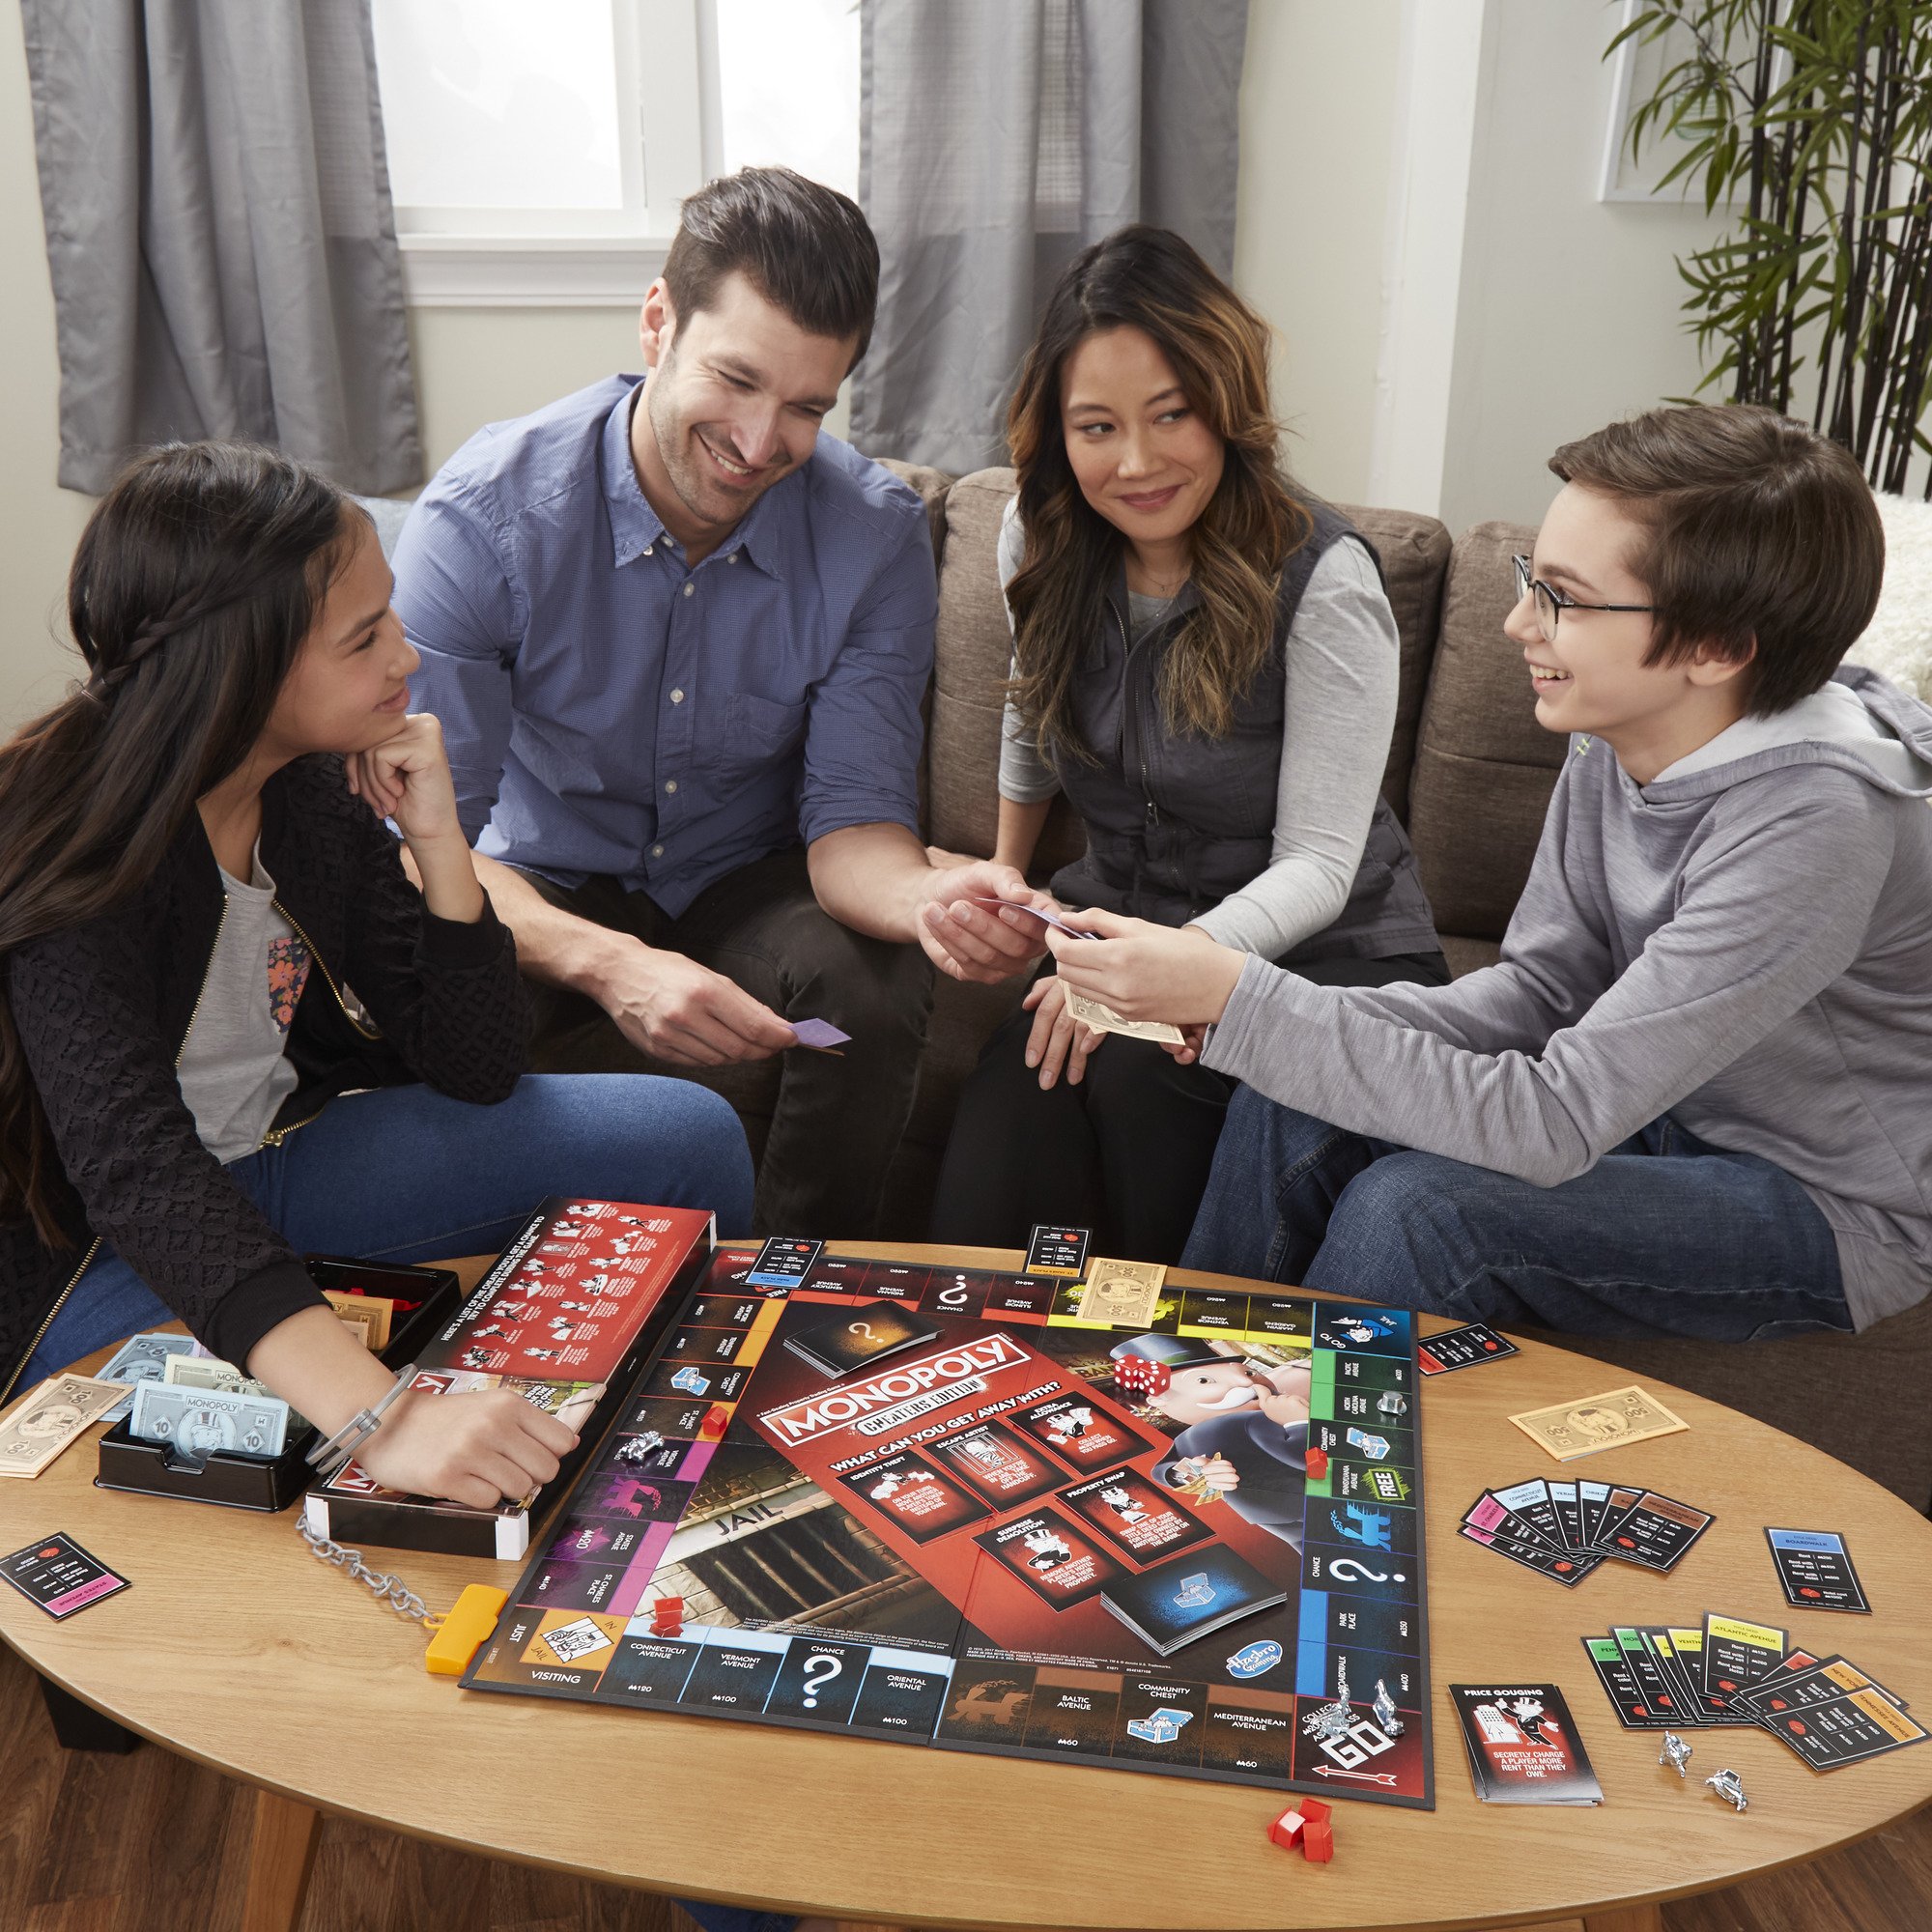 Monopoly Edición para Tramposos Hasbro